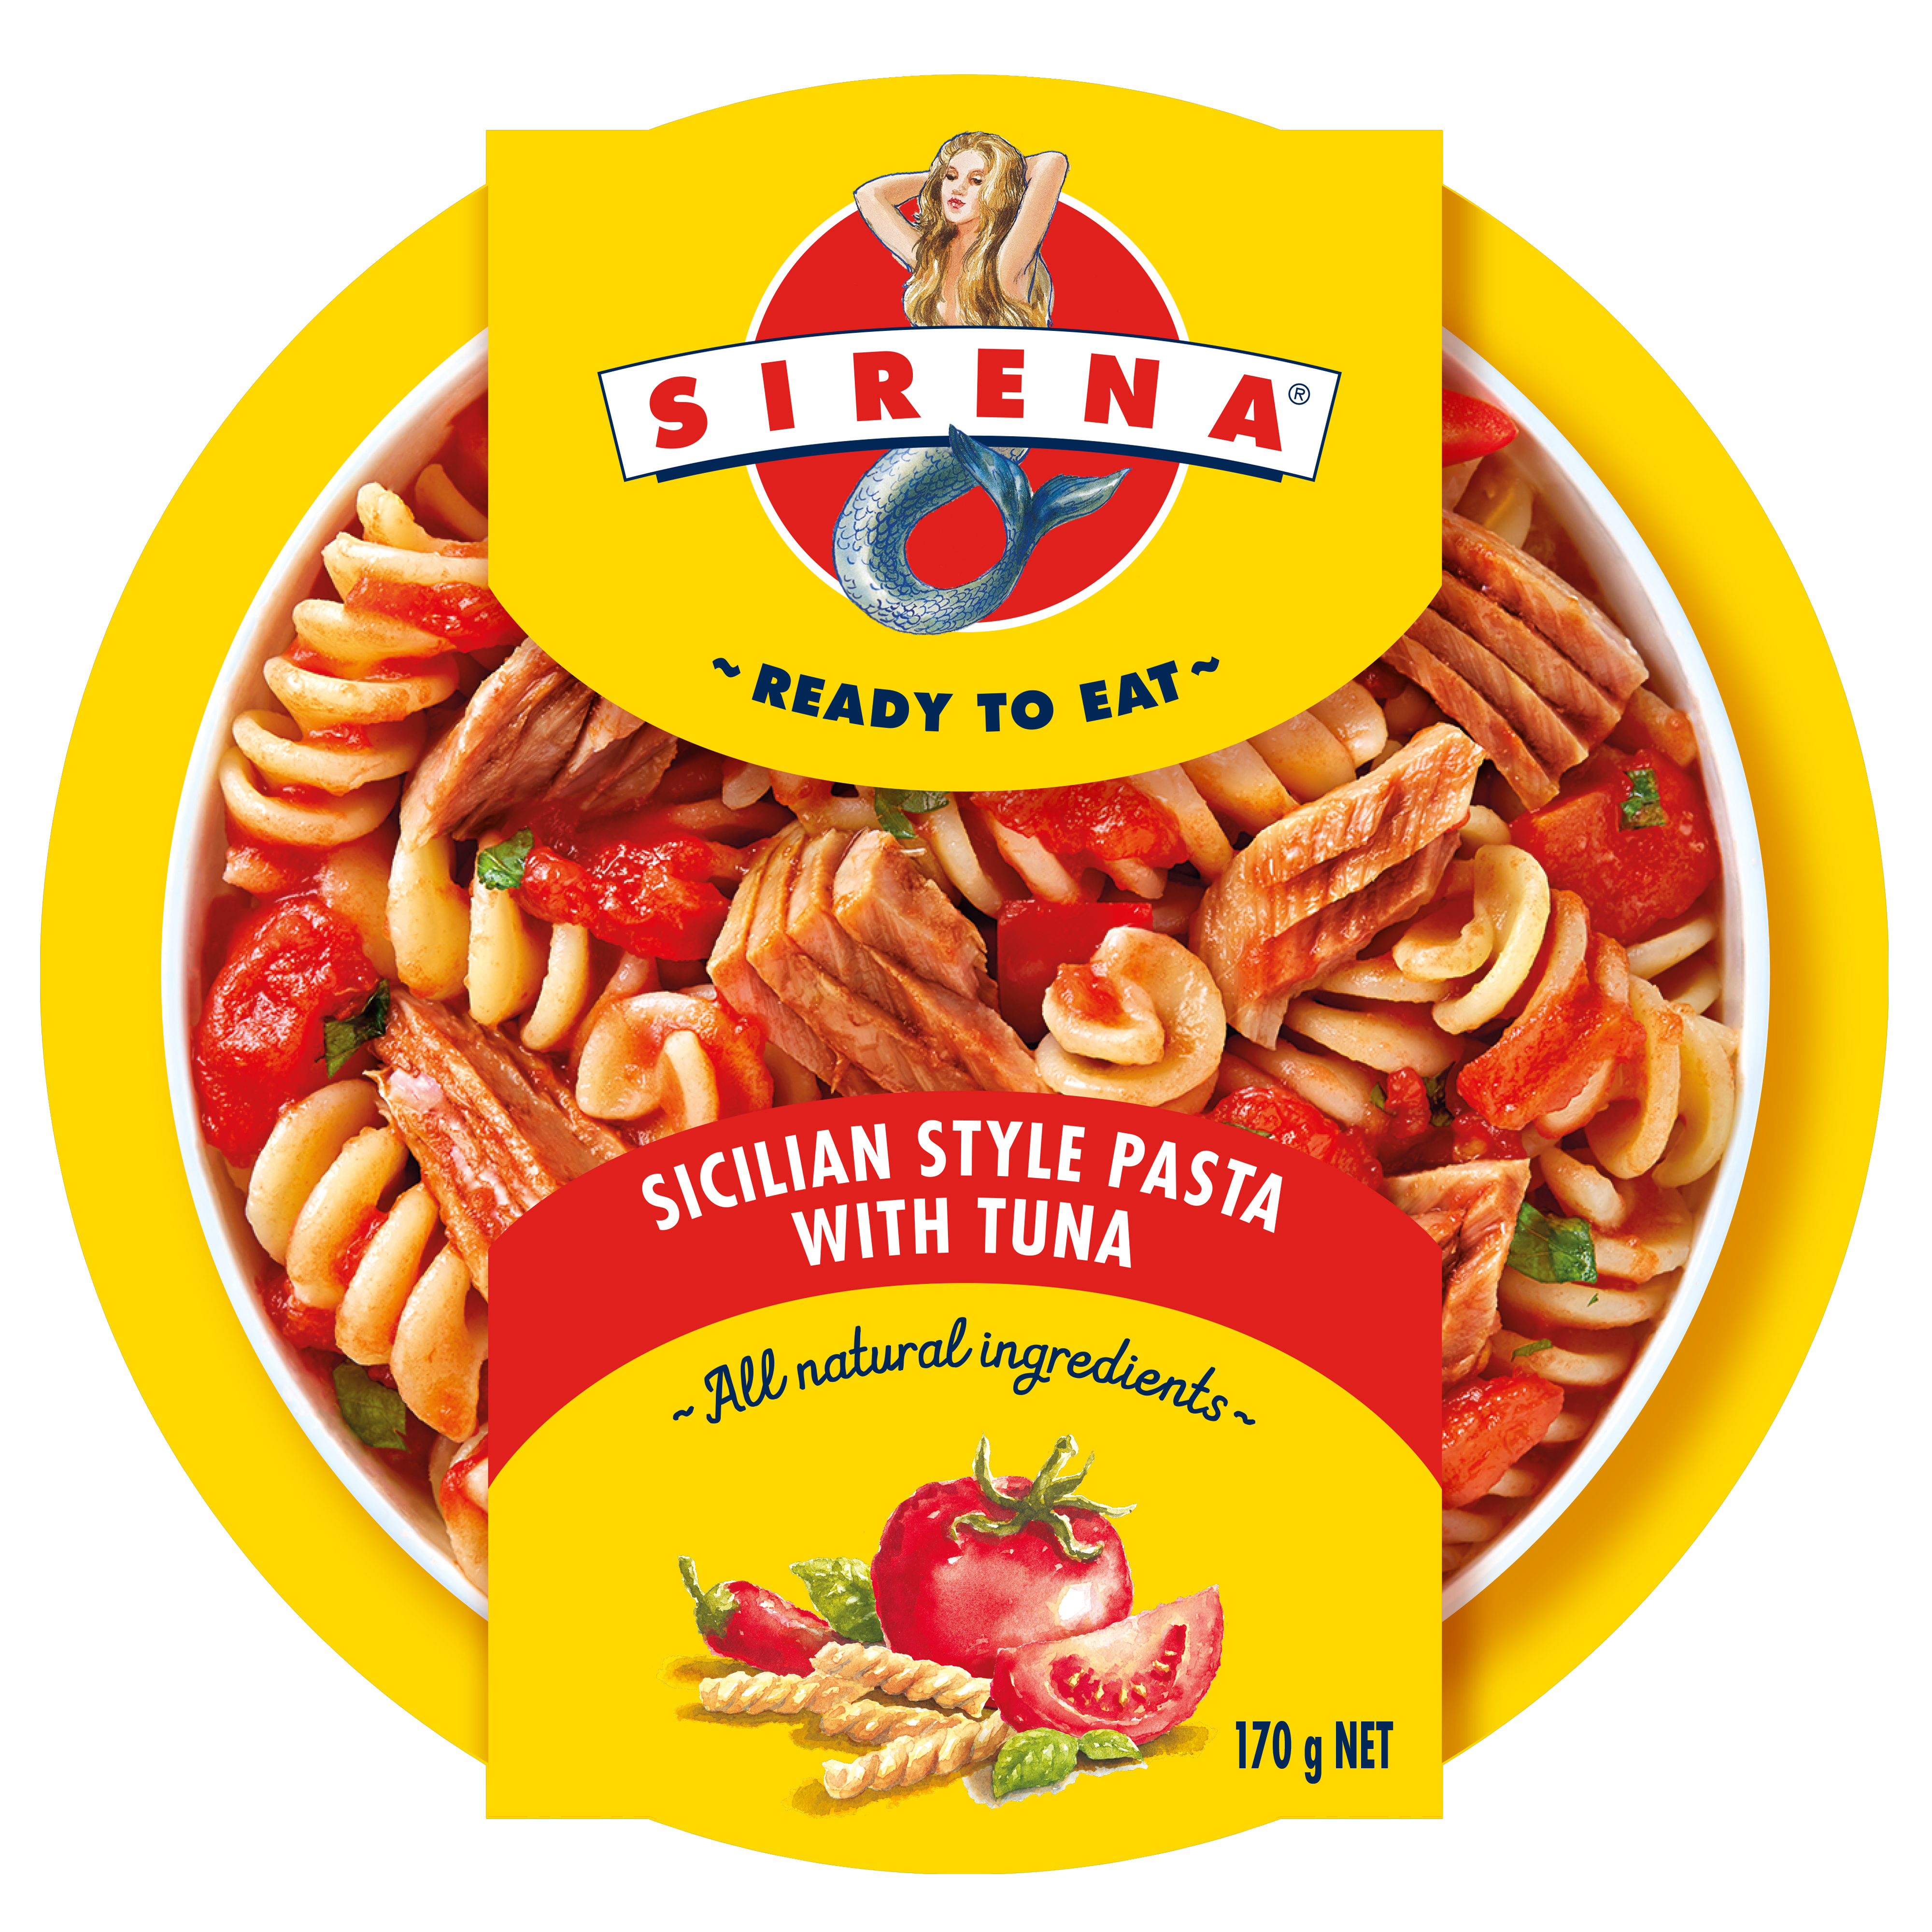 Sirena Ready to Eat Sicilian Style Pasta with Tuna